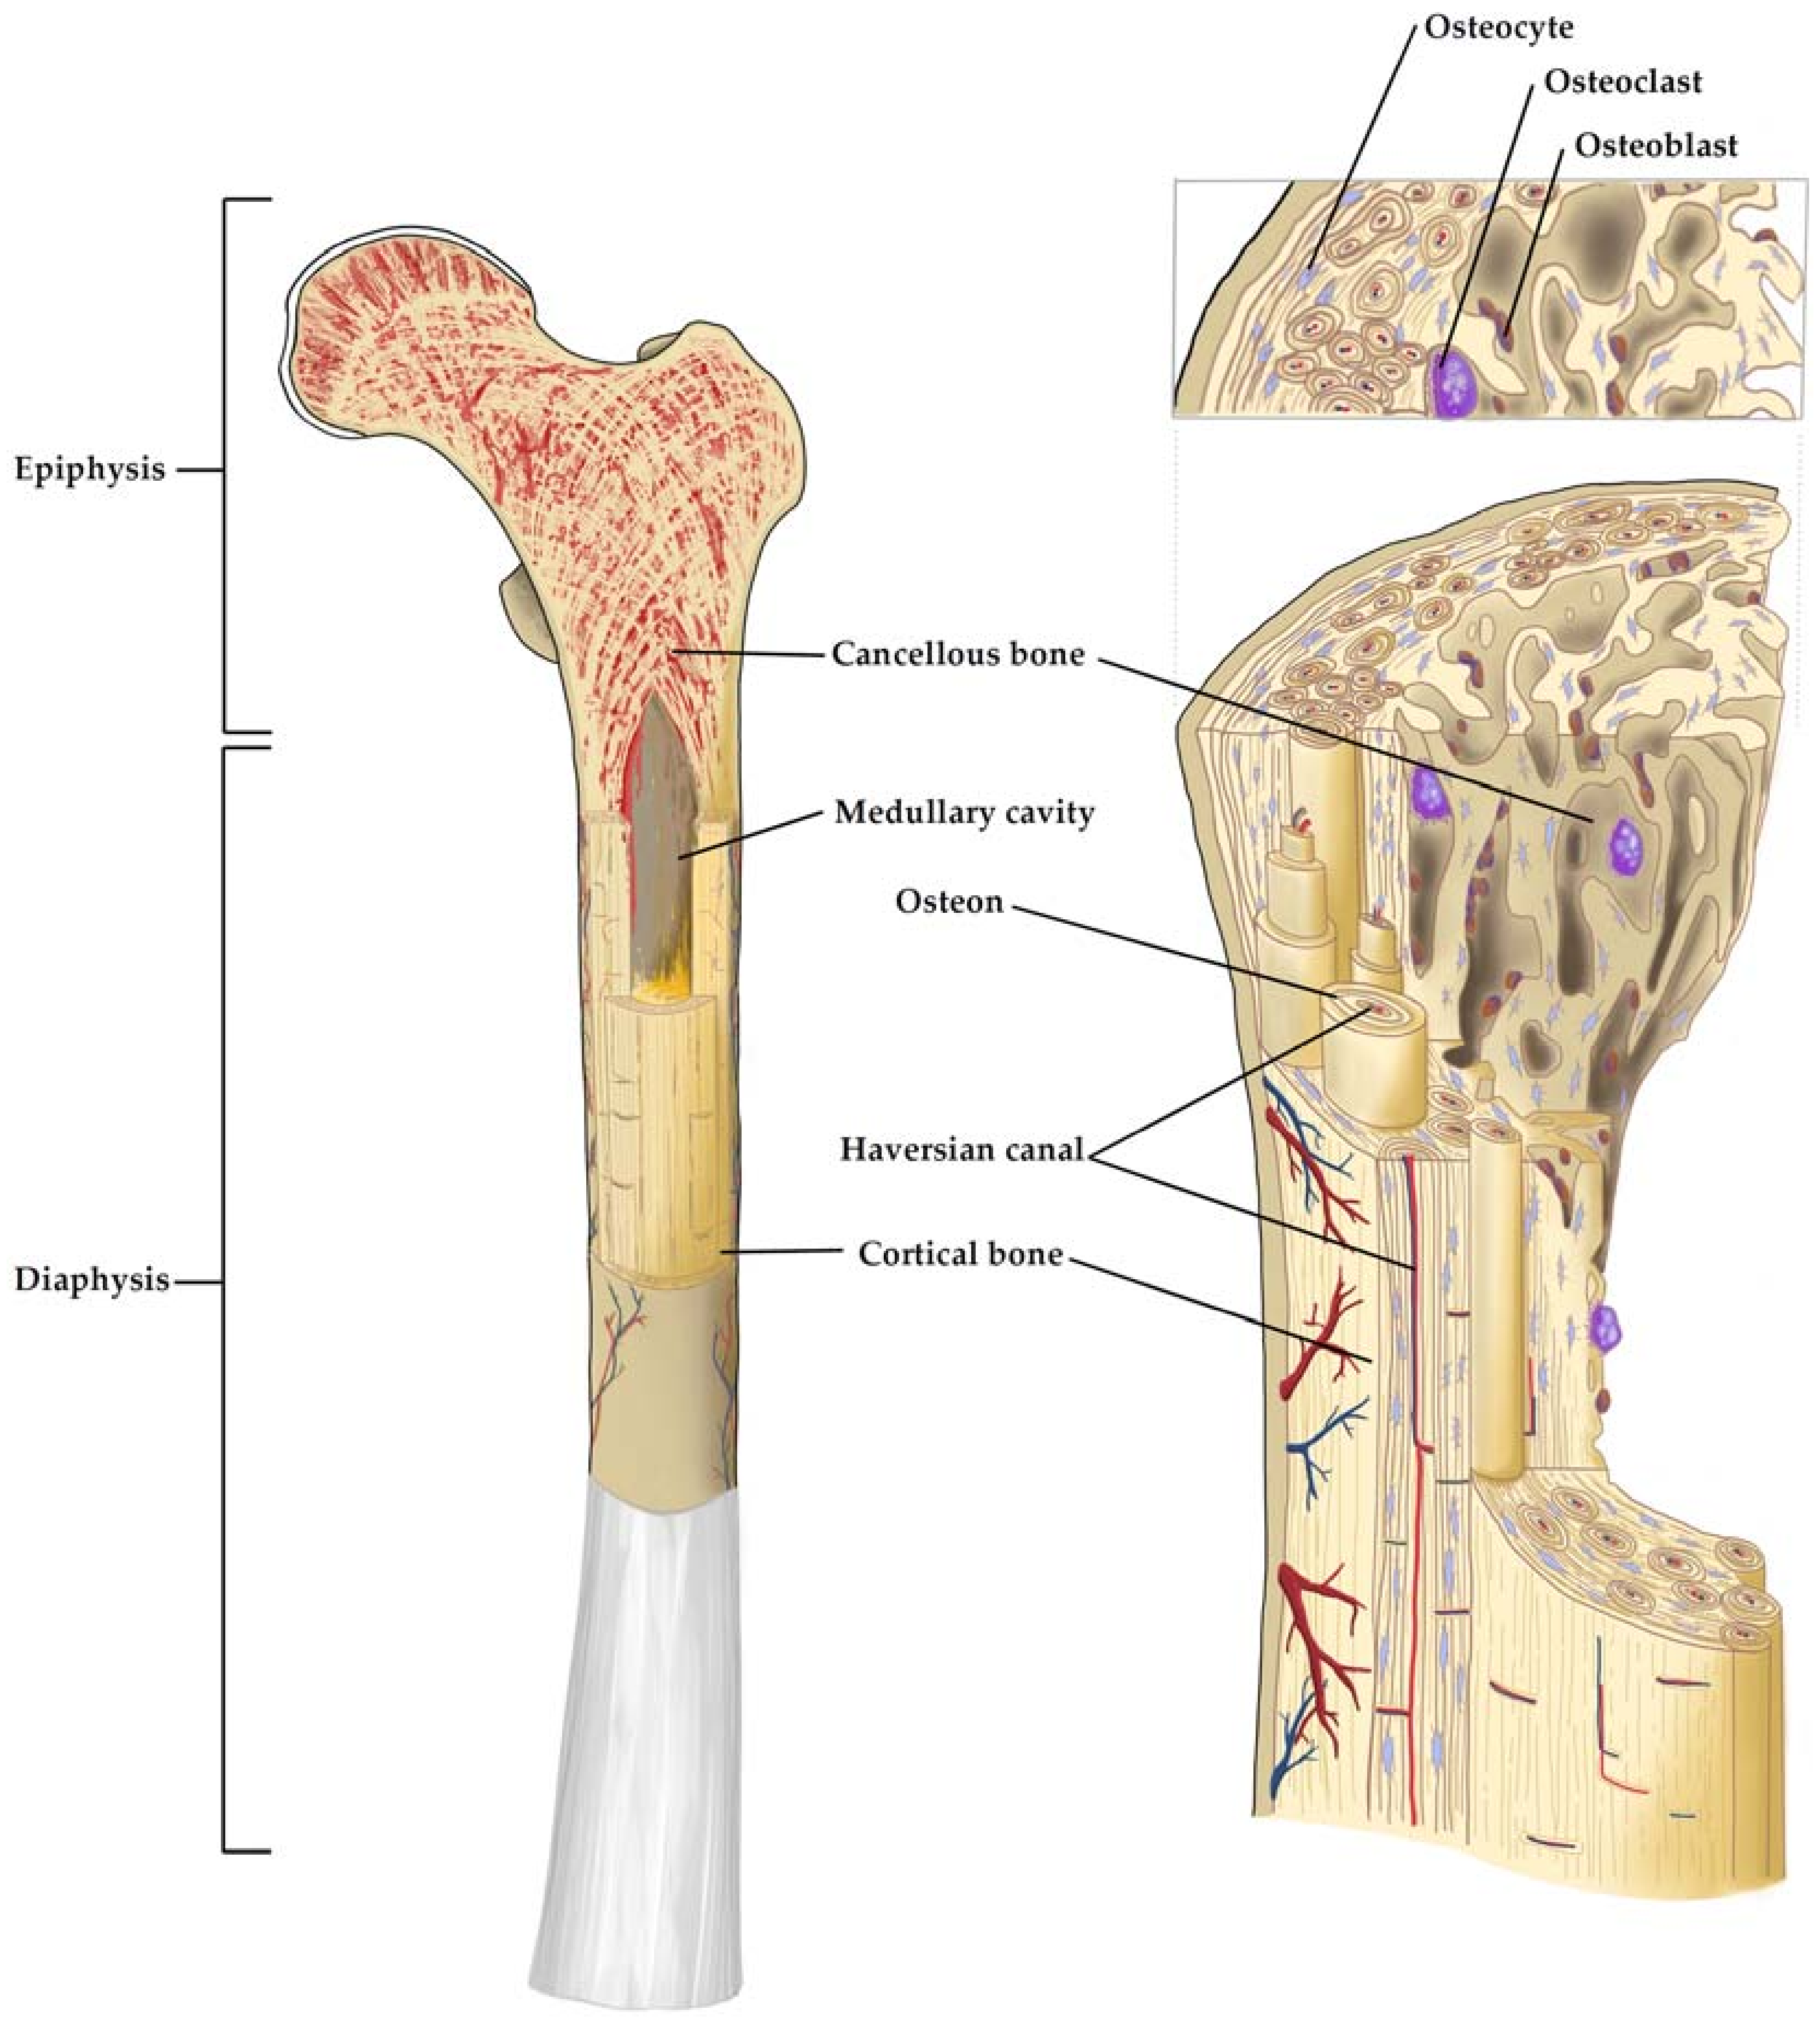 Models of long bone anatomy. Human long bone anatomy at the diaphysis